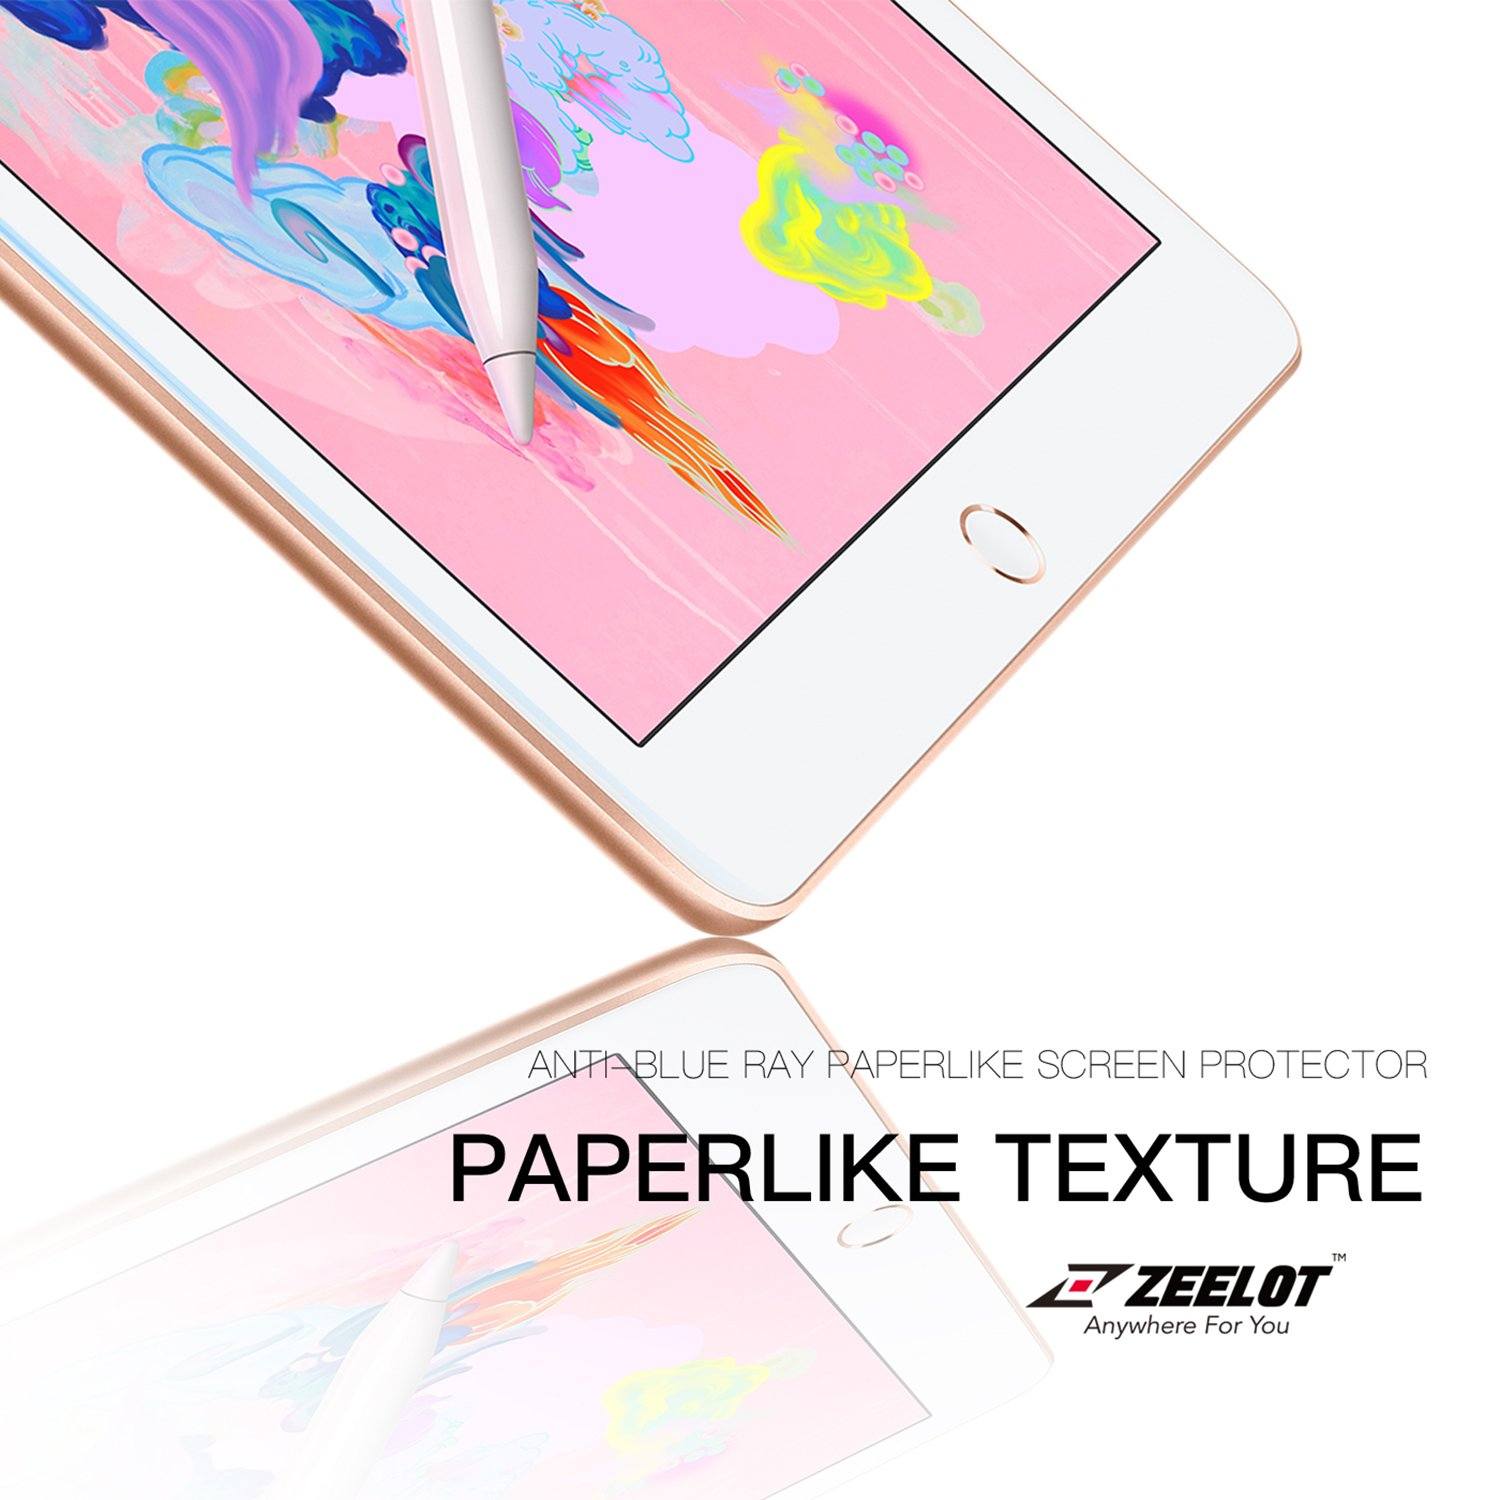 ZEELOT Paper Like Screen Protector for iPad 11"/ iPad Air 4 10.9" (2021/2018), Anti Blue Ray Default ZEELOT 